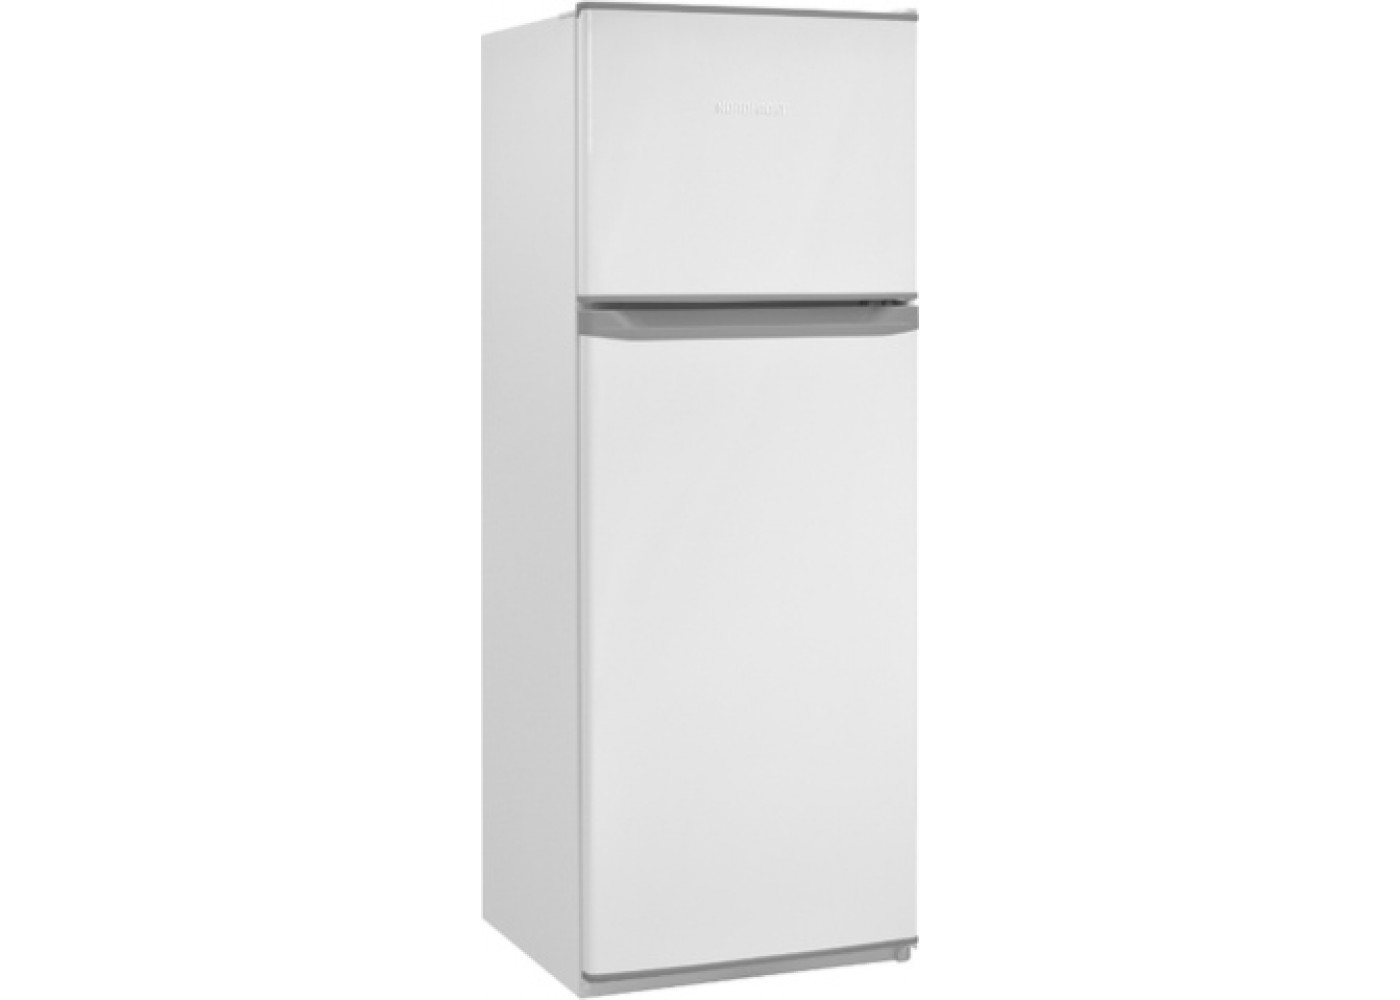 Холодильник NORDFROST FRT 545 002